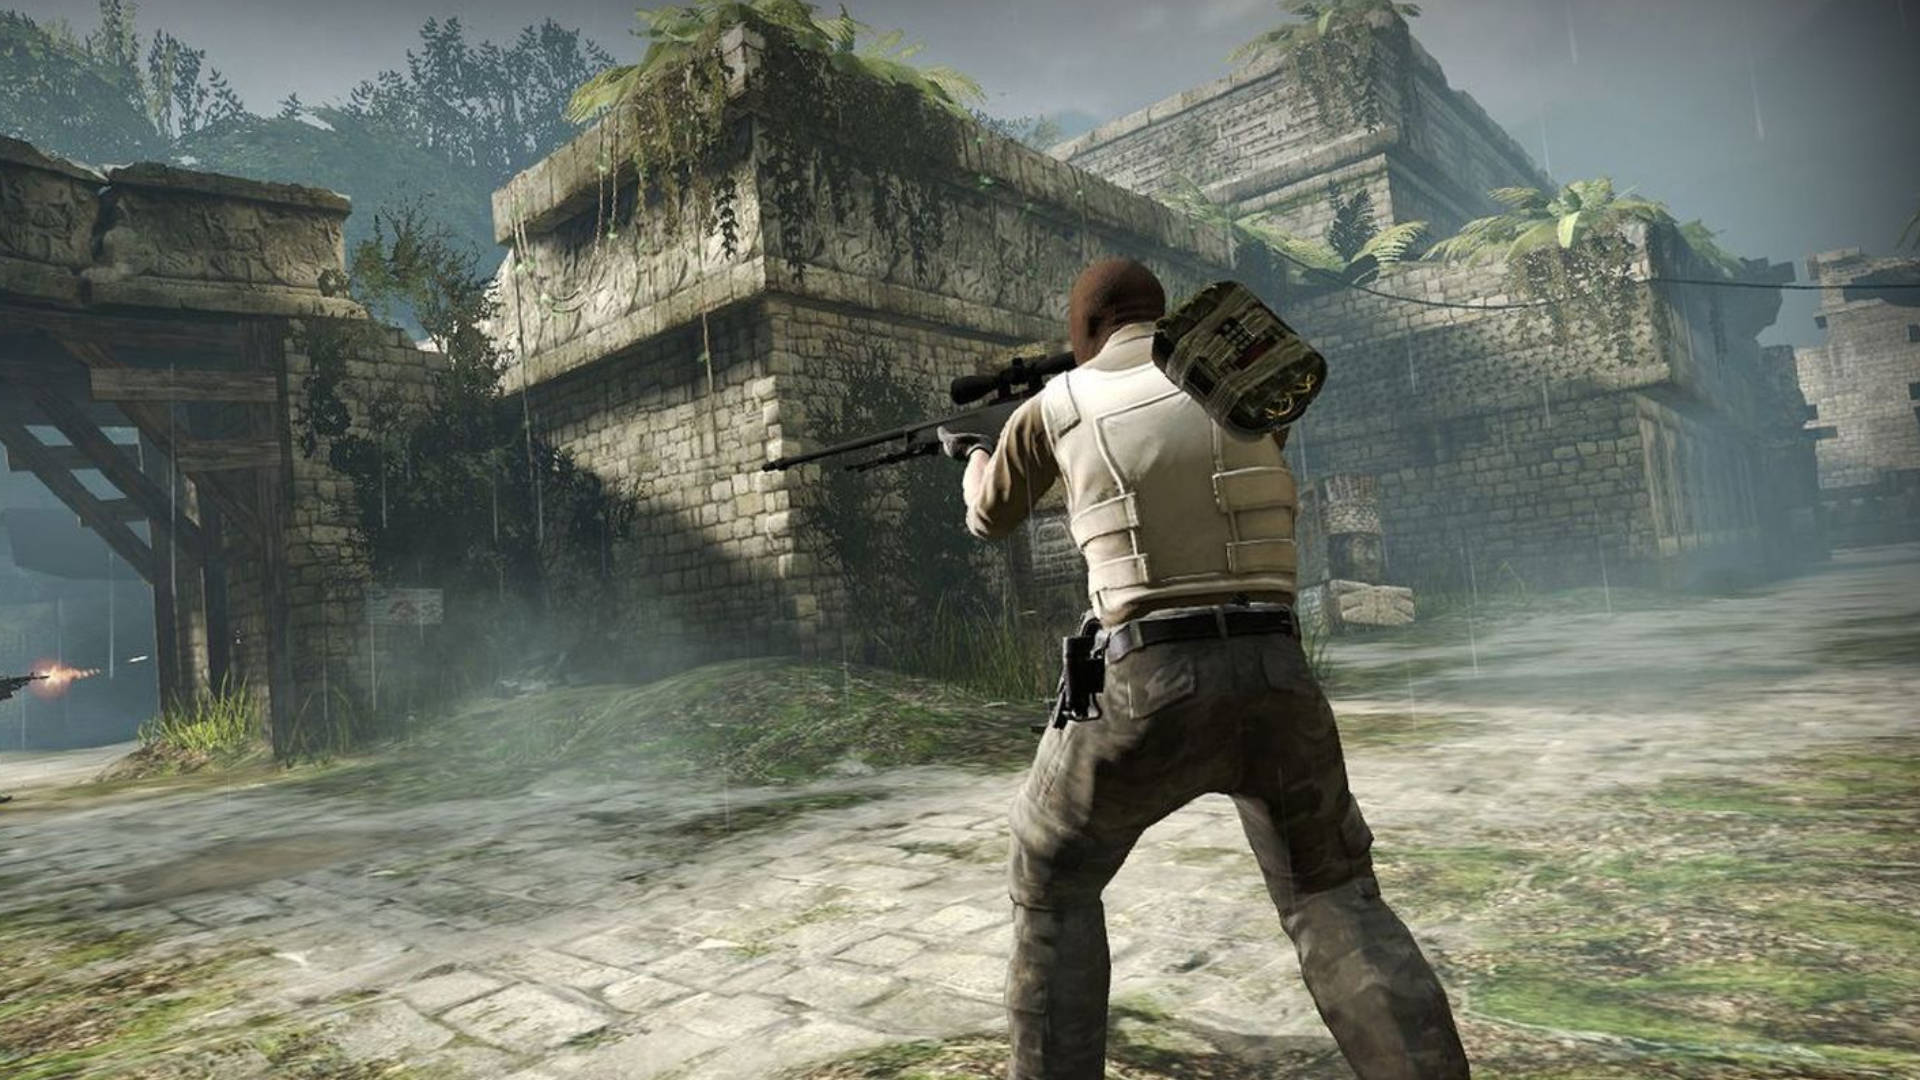 A Man Is Shooting A Gun In A Video Game Wallpaper